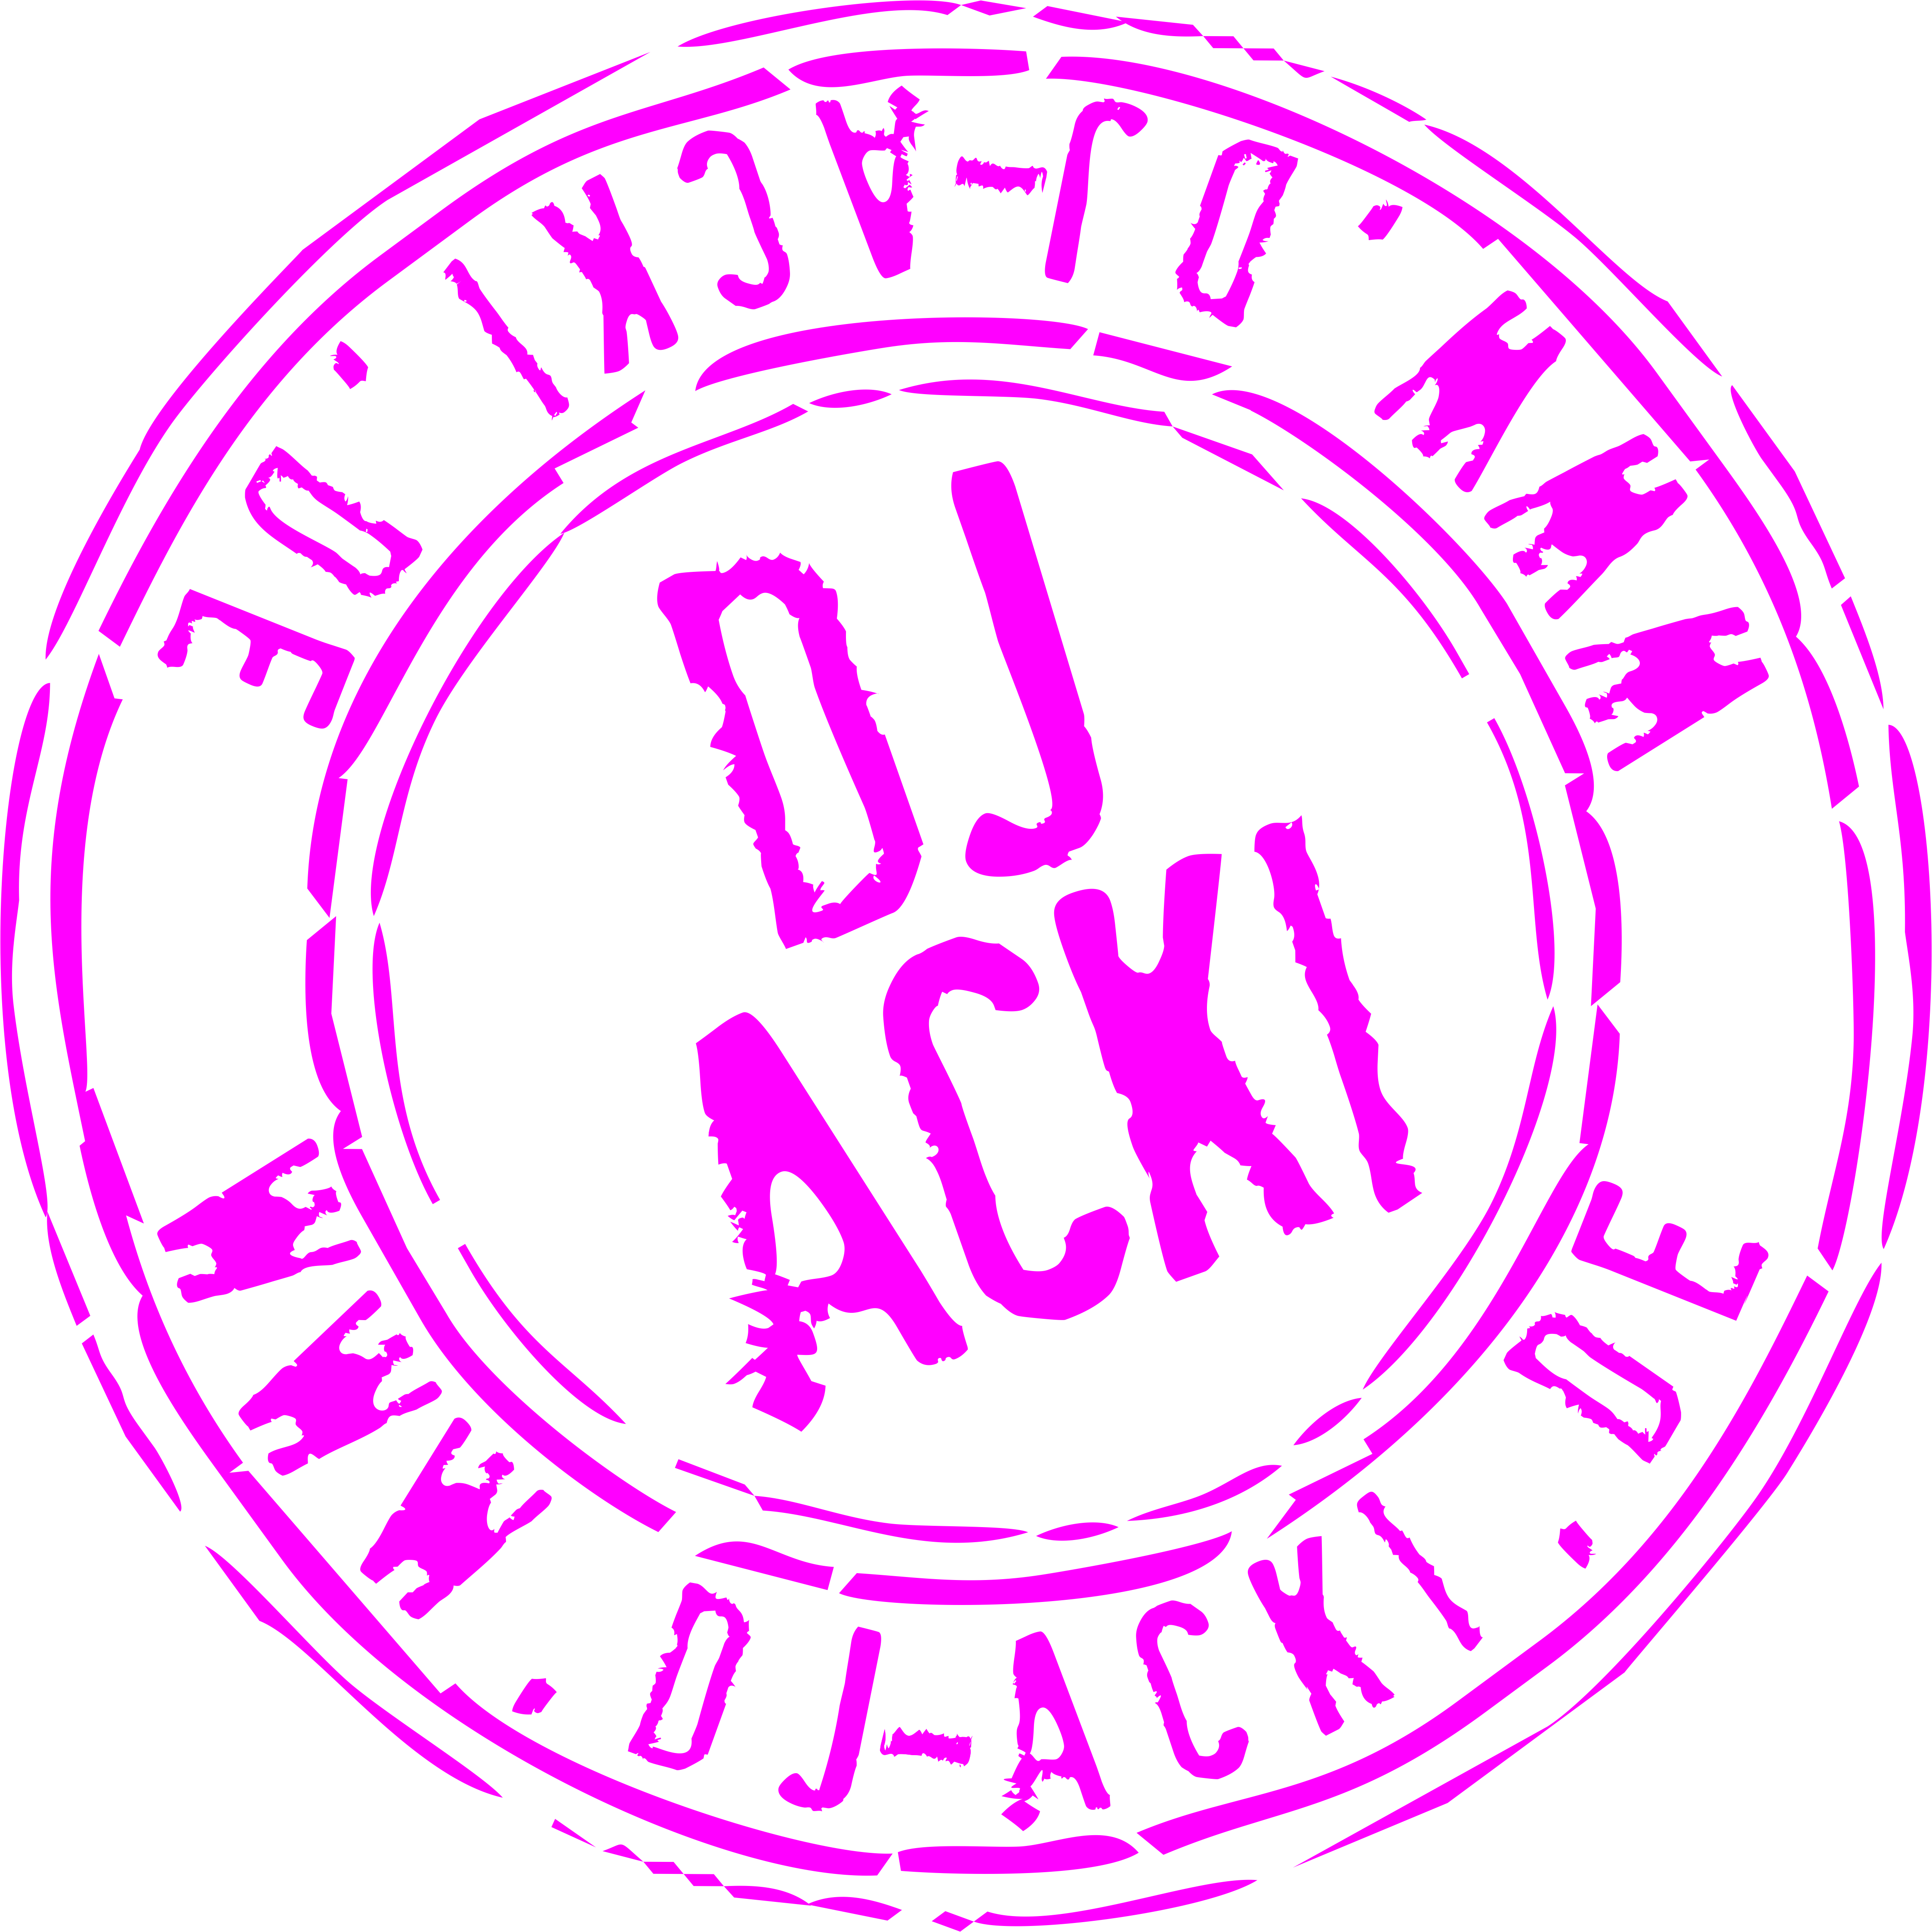 Event & Hochzeits DJ Acki